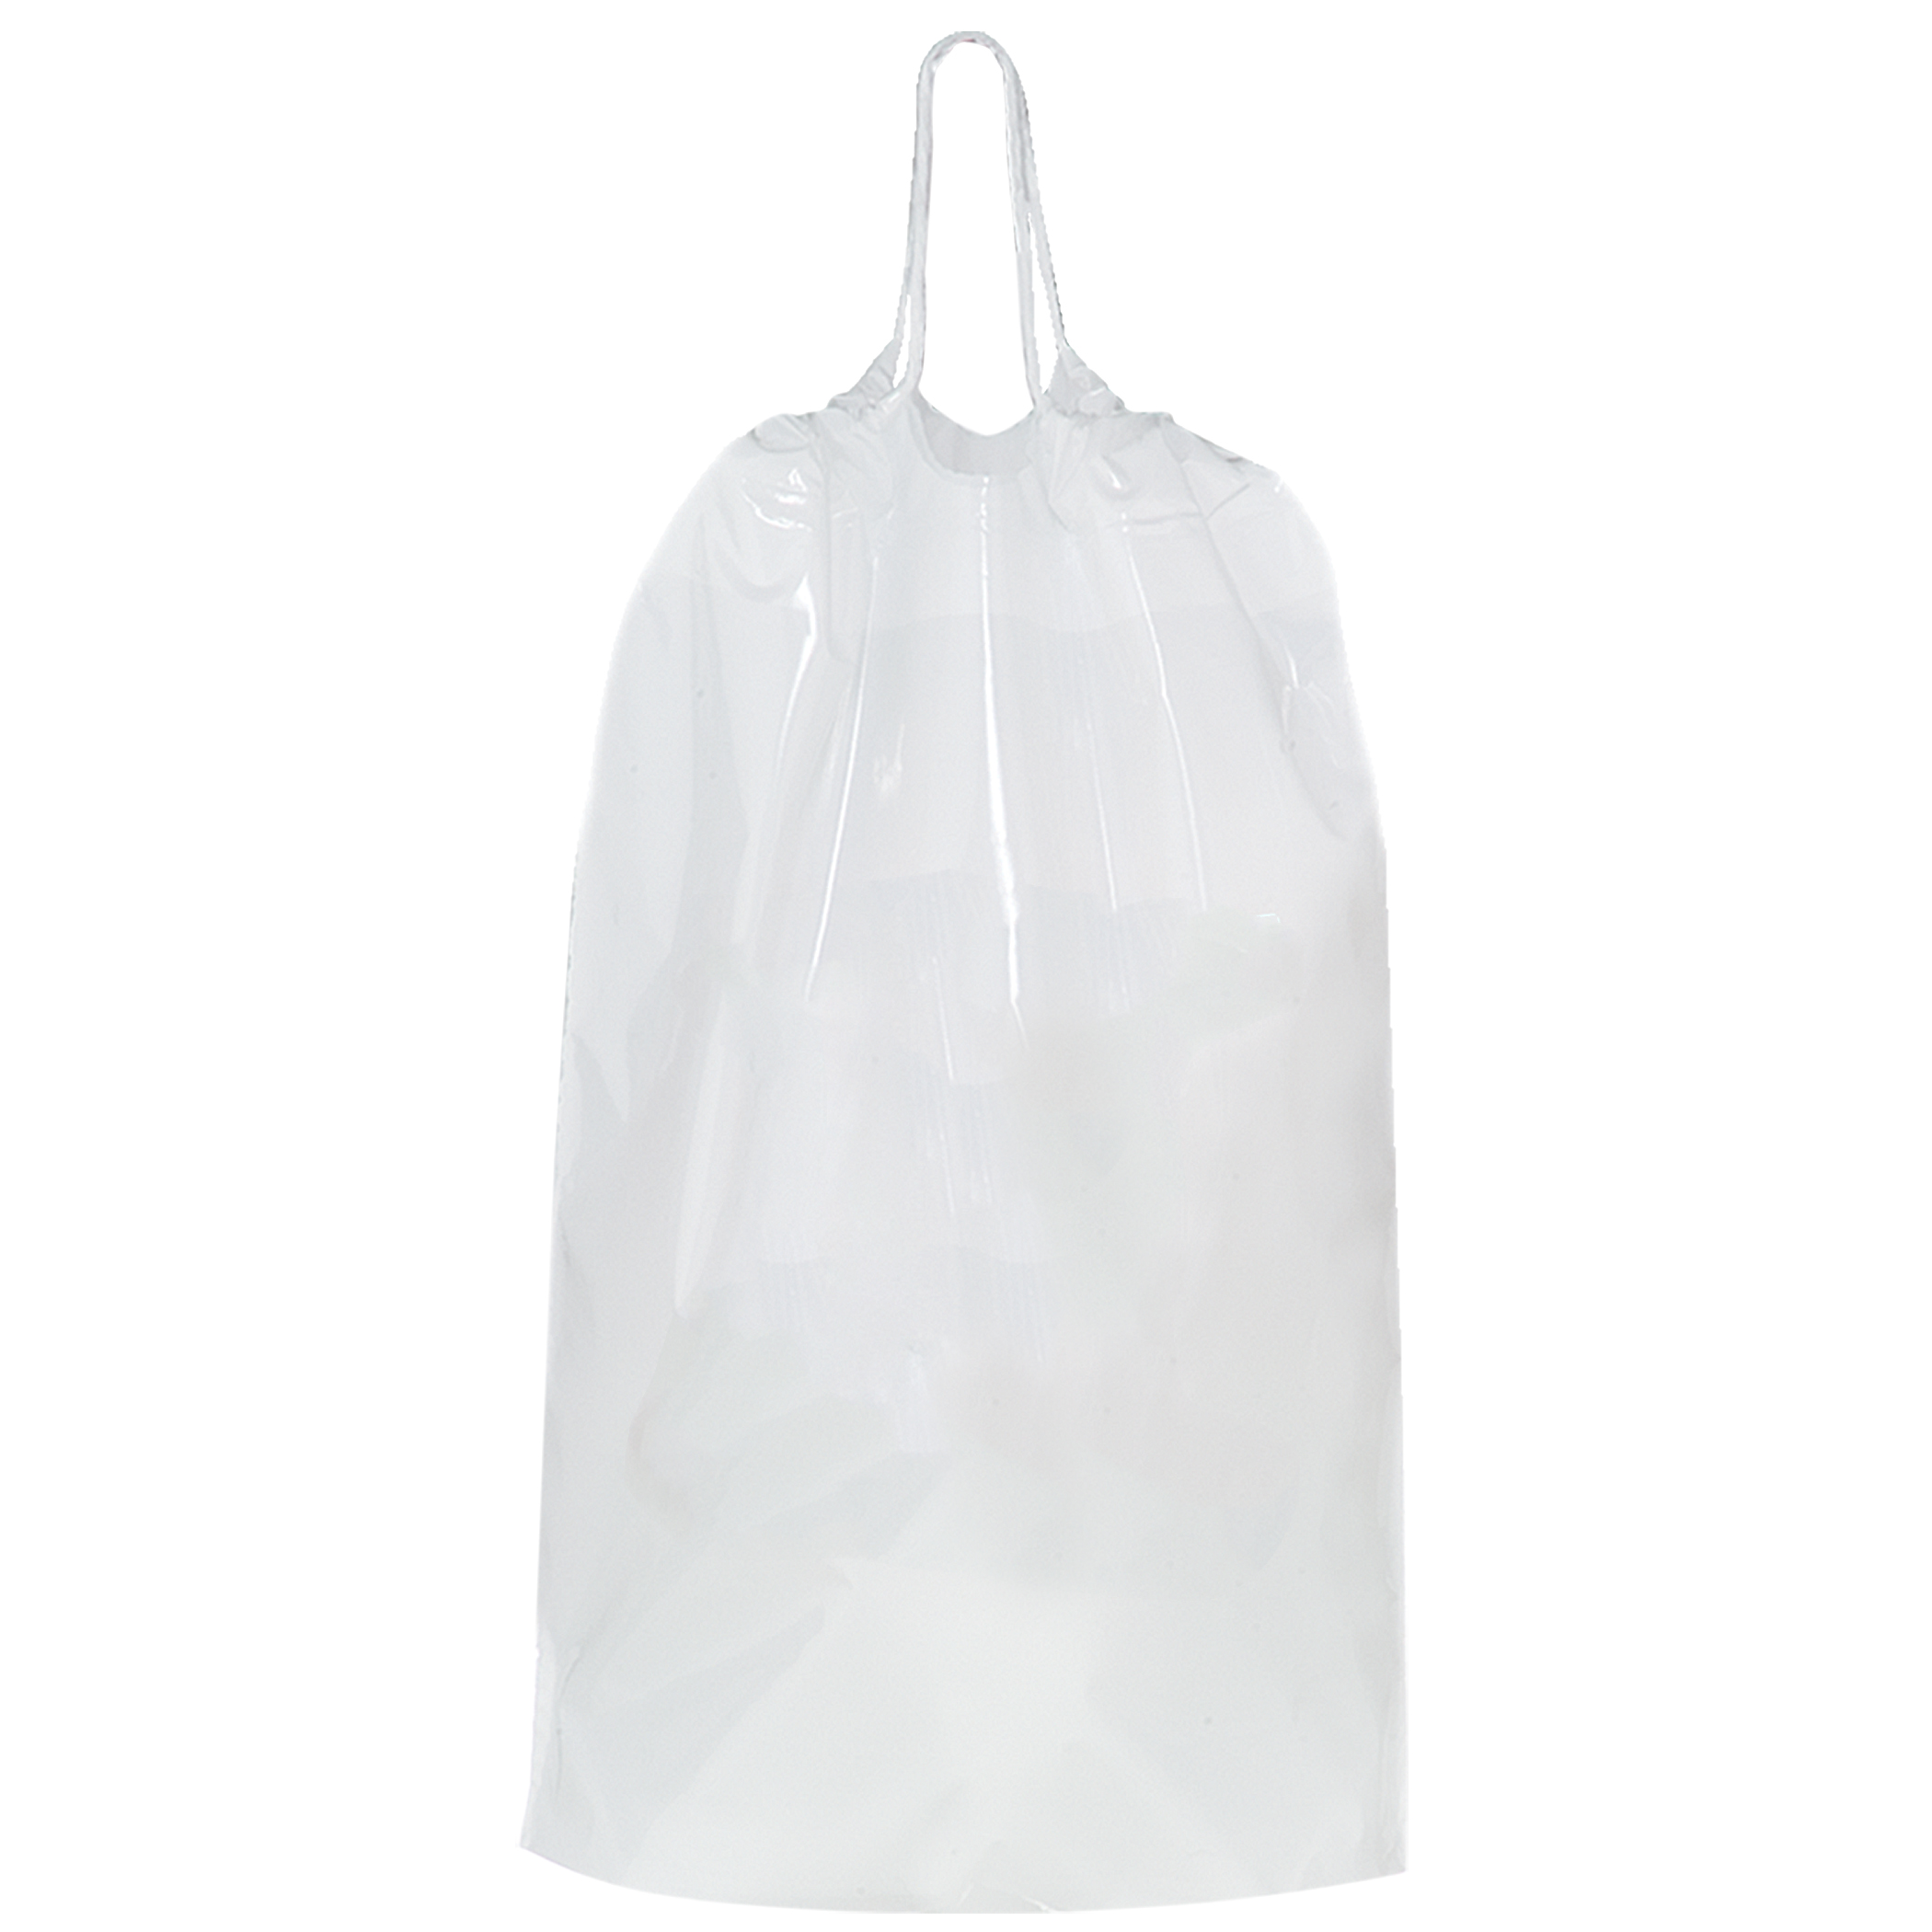 Cotton Cord Drawstring Plastic Bags - 12